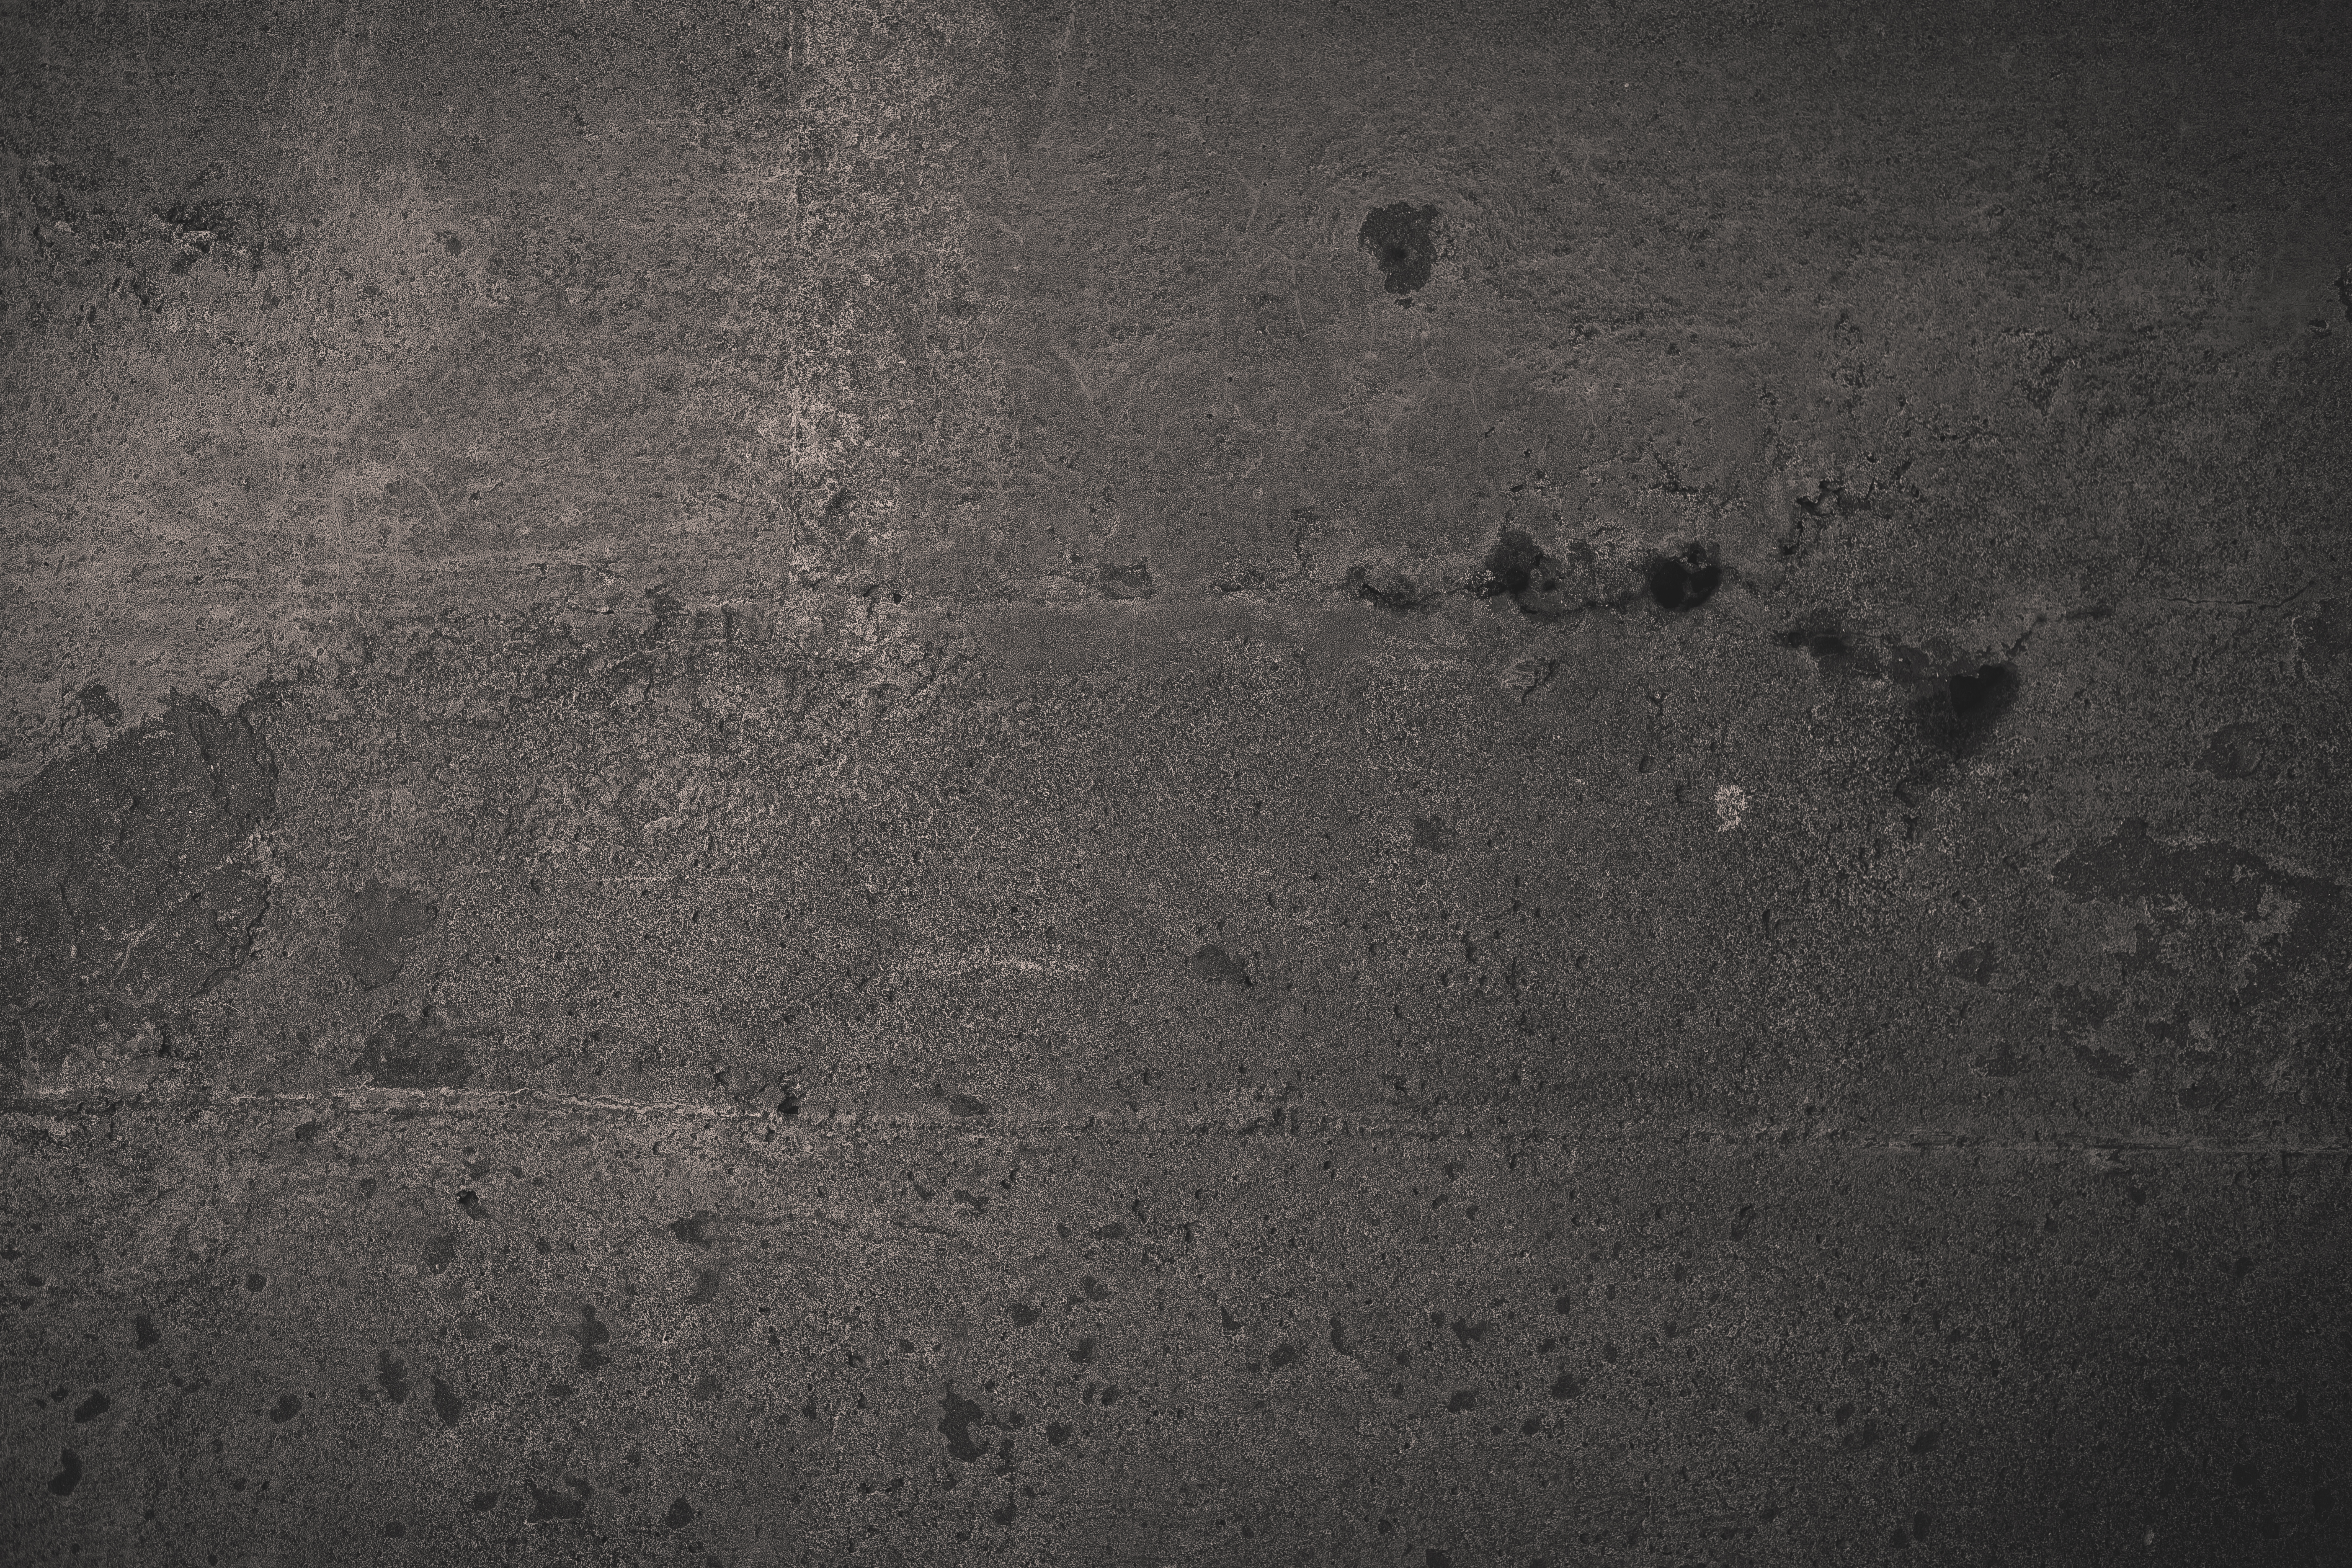 Free Subtle Grunge Concrete Textures | Freebies | Stockvault.net Blog